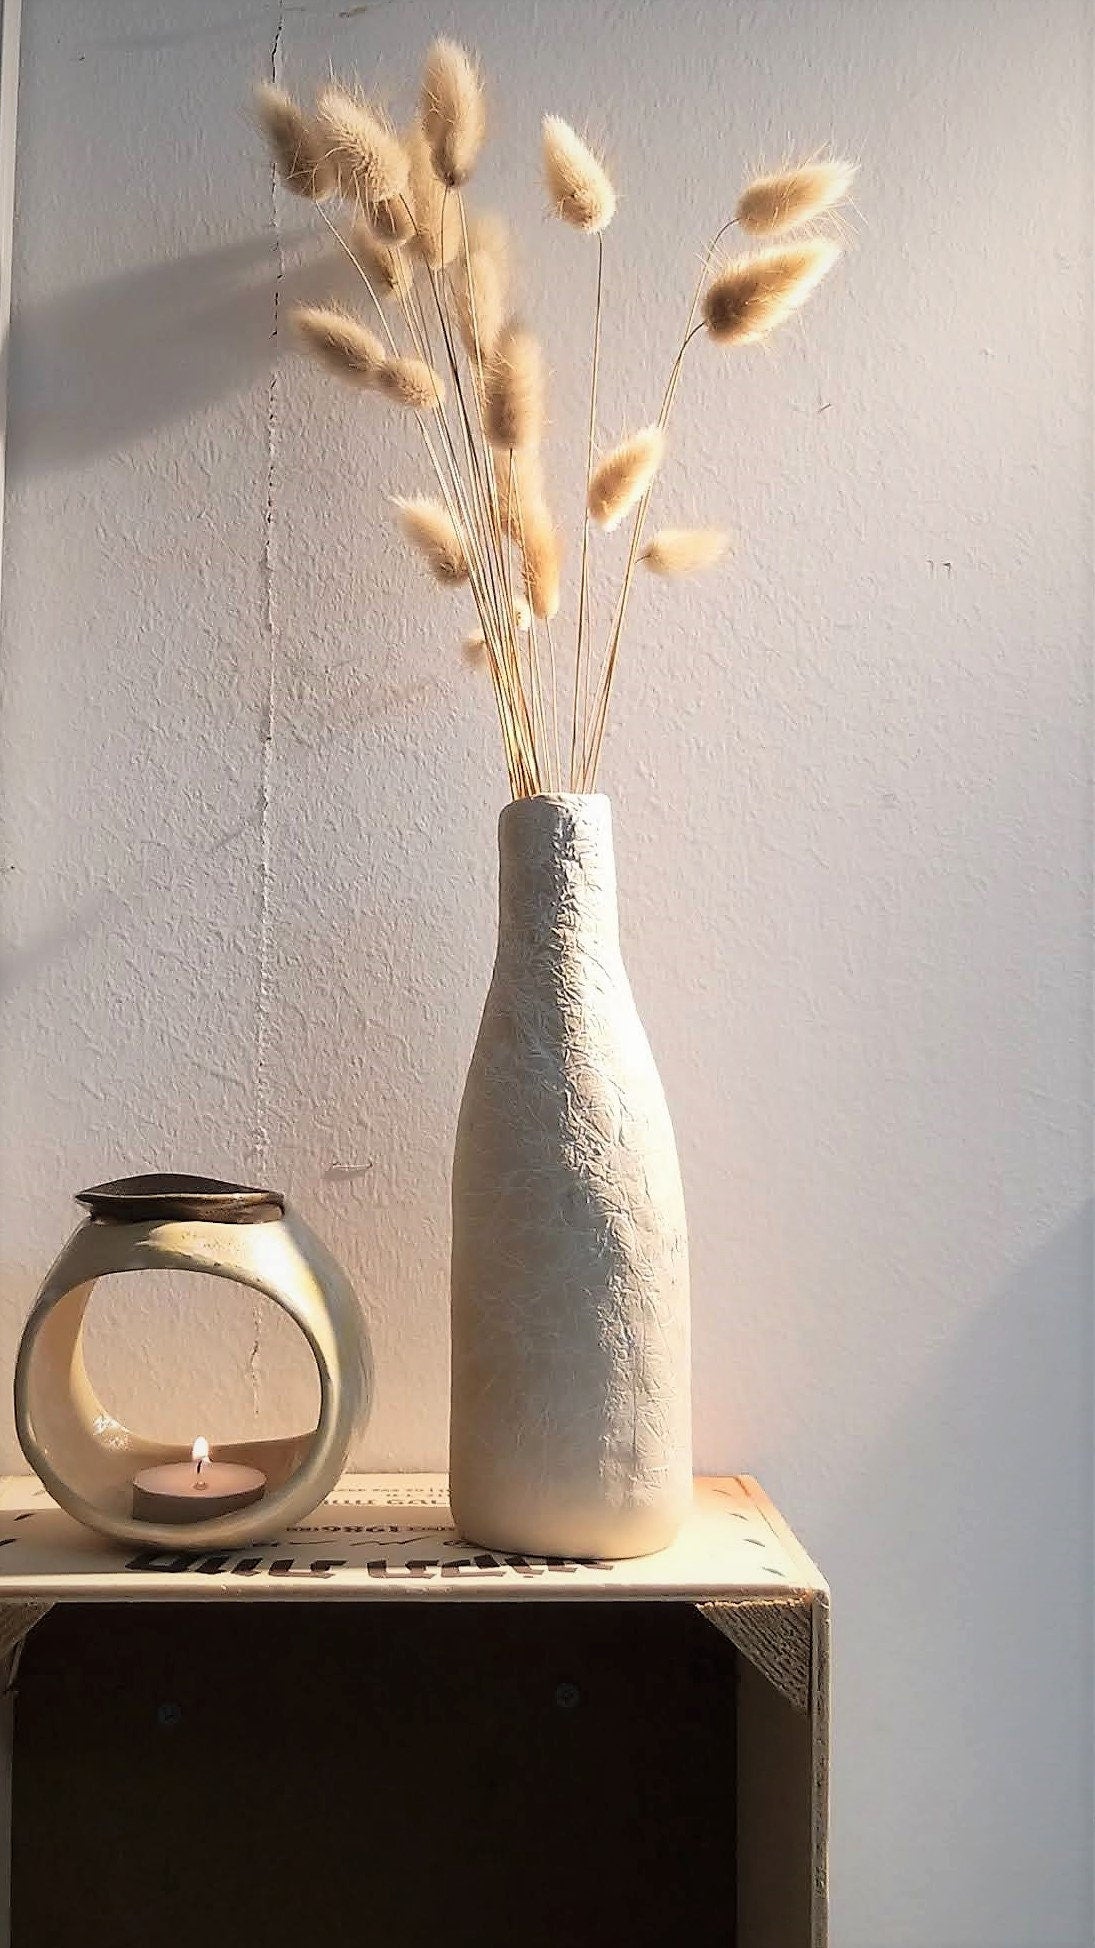 Bottle-shaped vase in ceramic white color